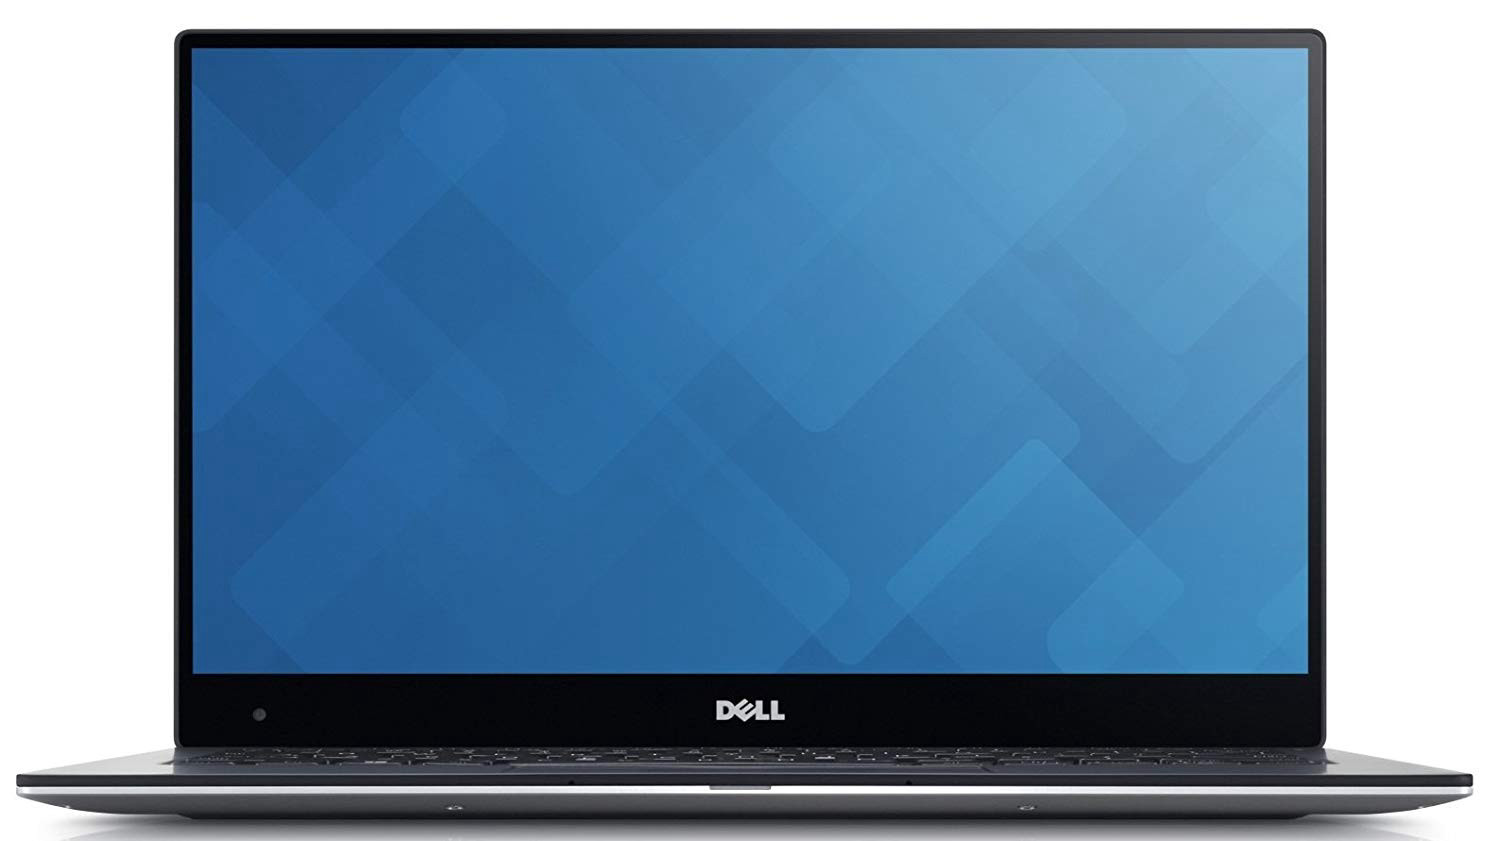 2018 Dell XPS 13 9360 Ultrabook - 13.3" QHD+ Infinity TouchScreen (3200x1800), 8 Gen Intel Quad-Core i7-8550U, 512GB PCIe NVMe SSD, 16GB RAM, Backlit, Windows 10 - Wty til 2019 (Certified Refurbished)